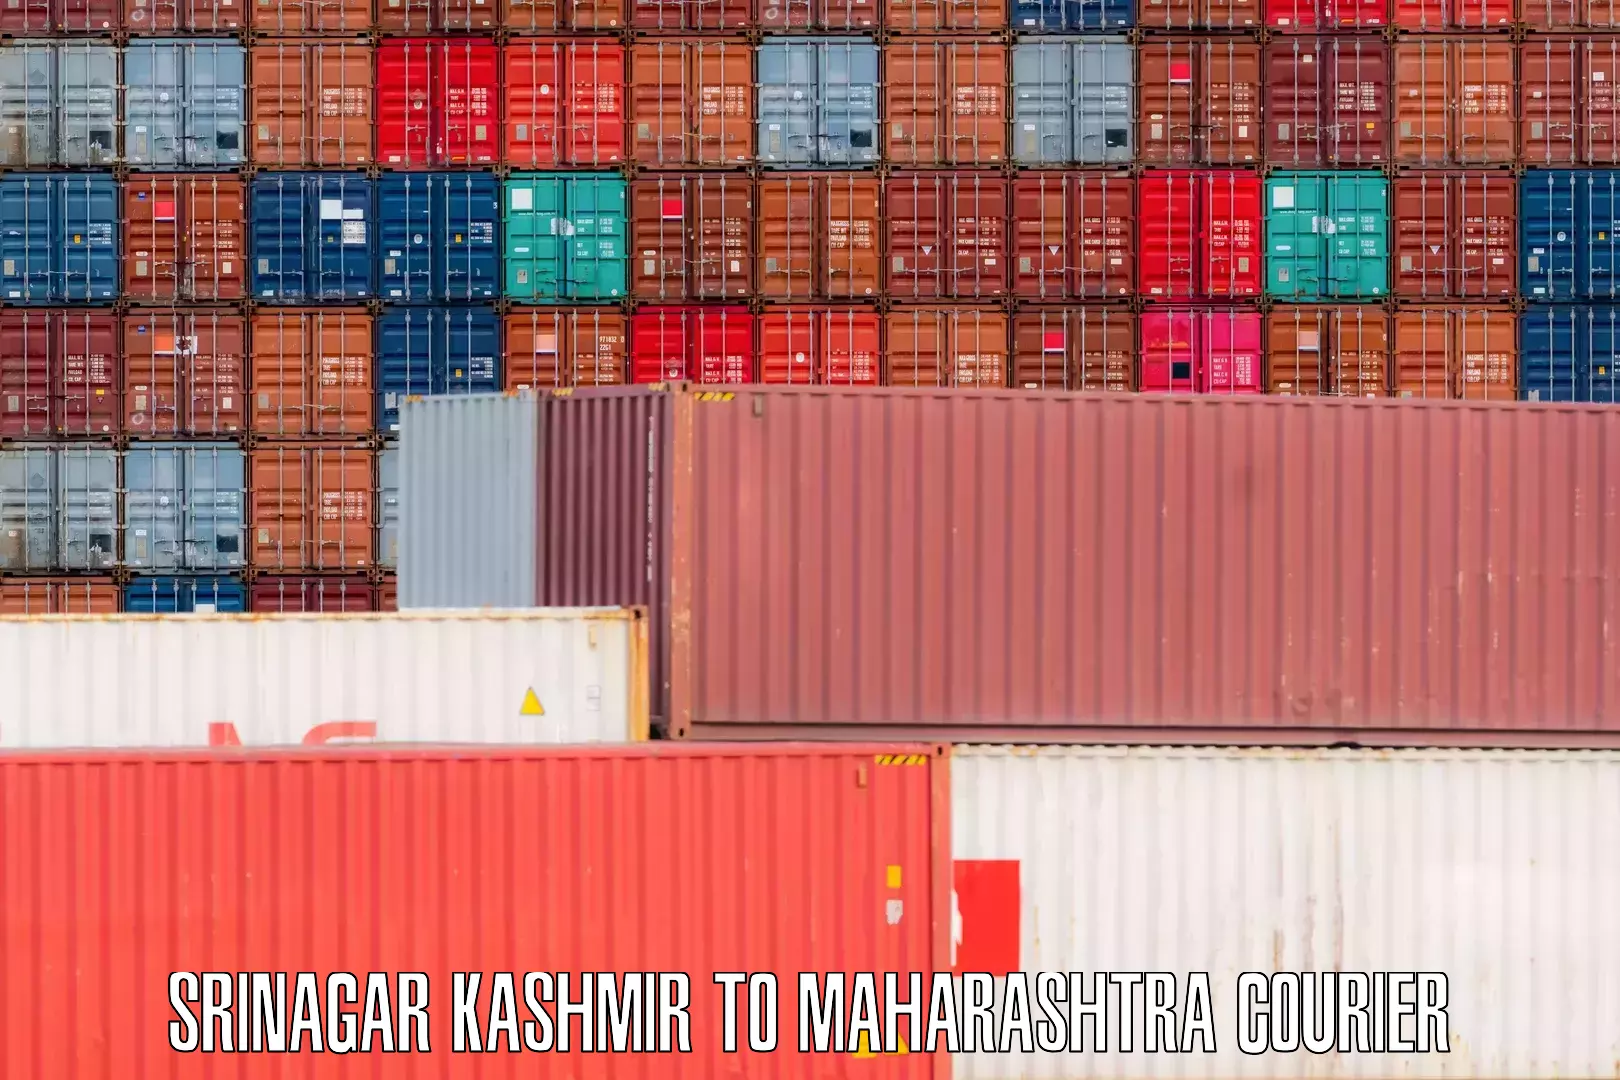 Personal effects shipping Srinagar Kashmir to Maharashtra